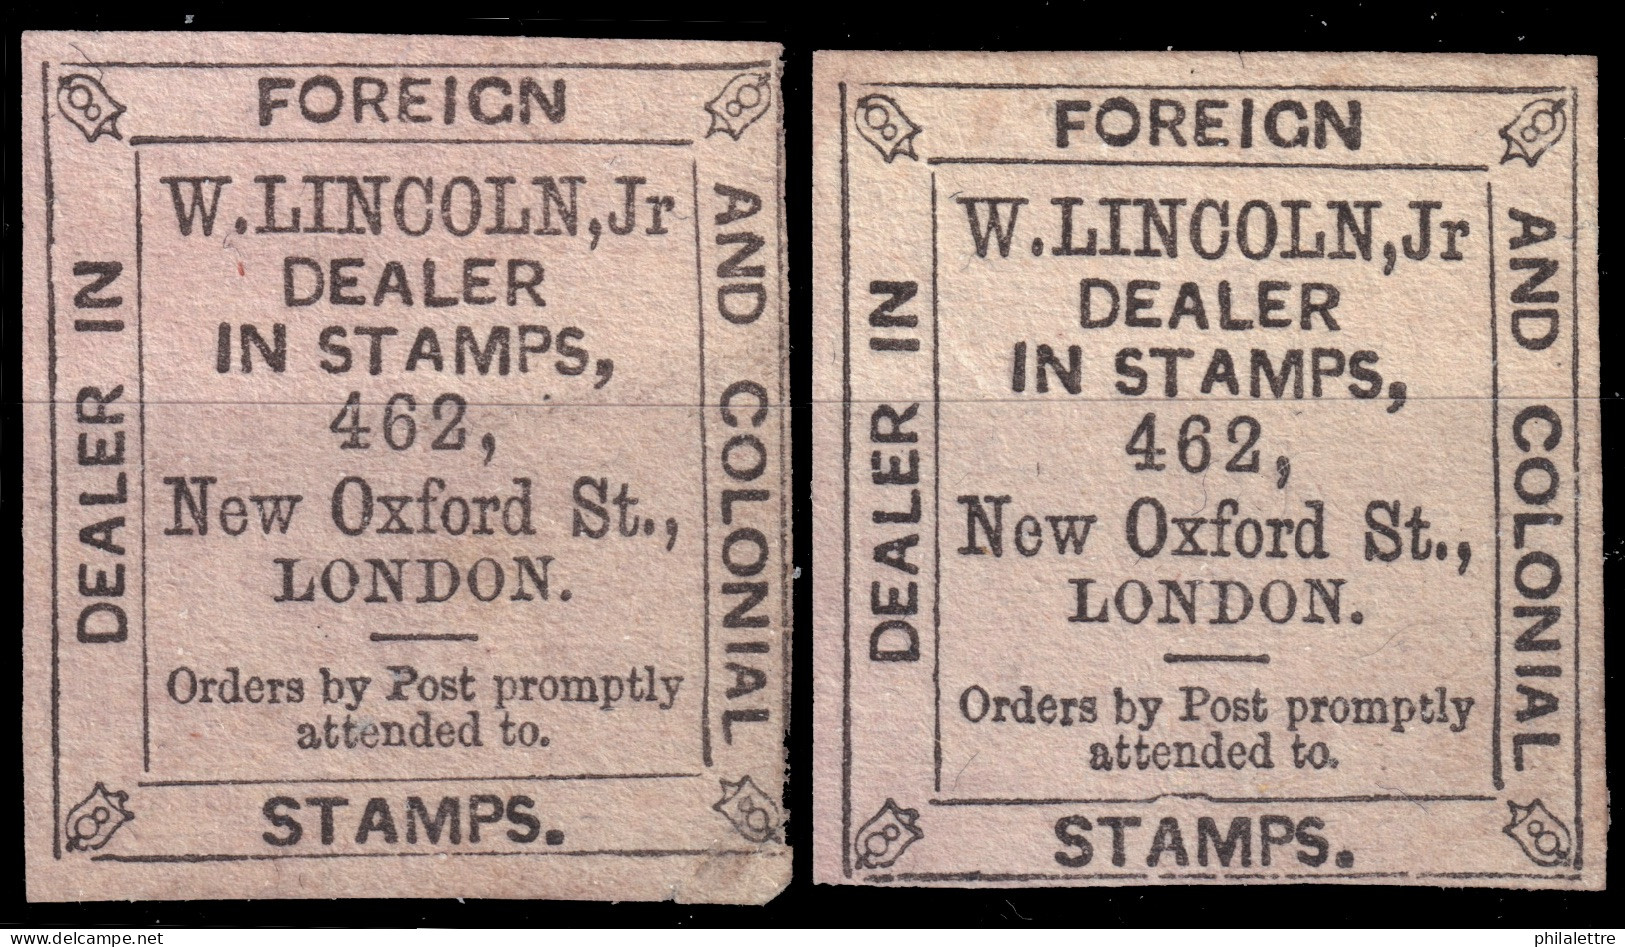 ROYAUME-UNI / UNITED KINGDOM - 2x 1900s/1920s Labels For Stamp Dealer William Lincoln, Jr. Black On Pinkish White - Cinderelas